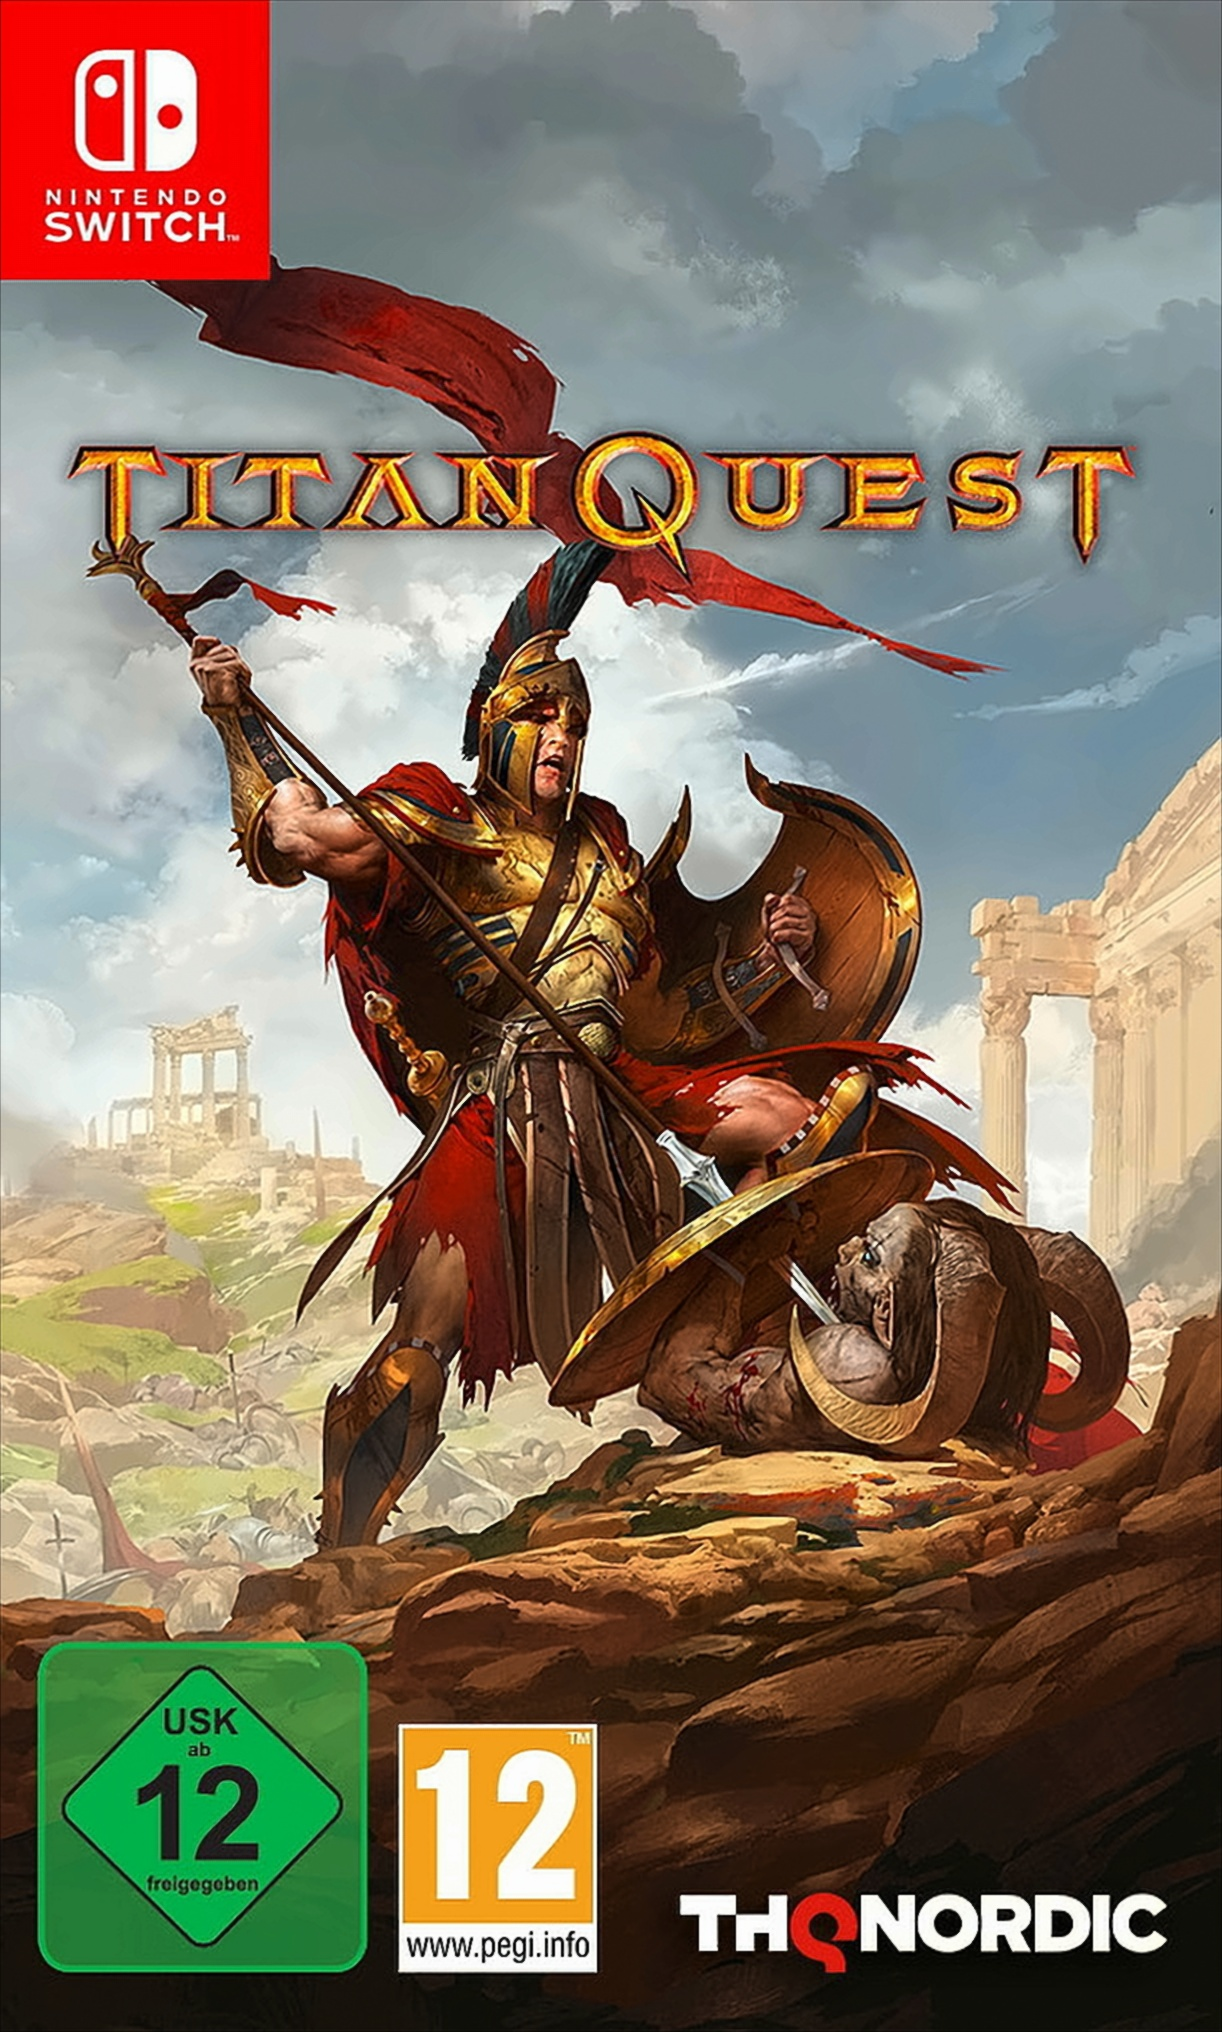 Titan Switch] Quest - [Nintendo